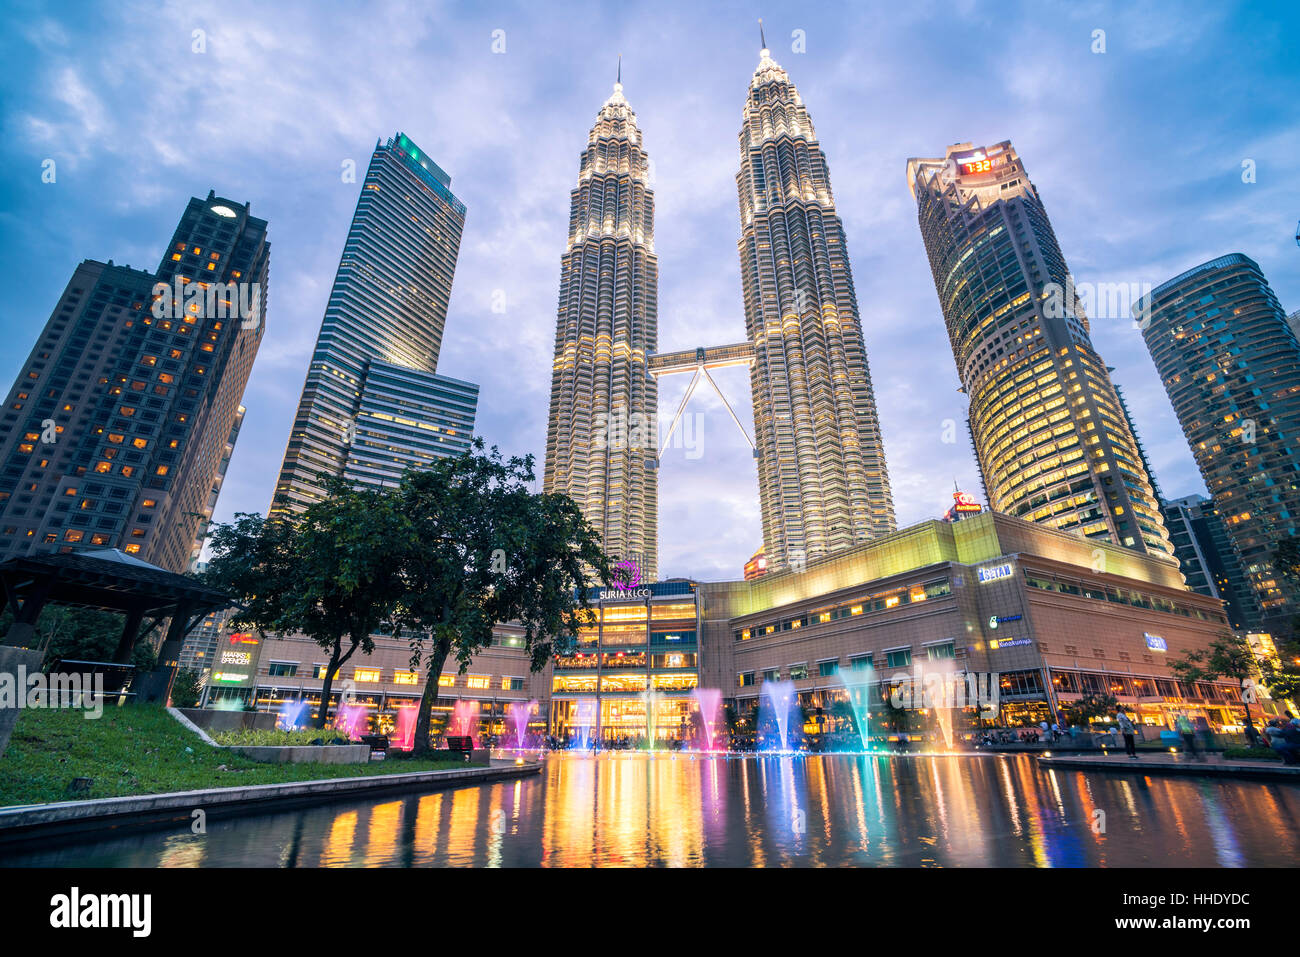 Petronas Twin Towers light display at night, Kuala Lumpur, Malaysia Stock Photo